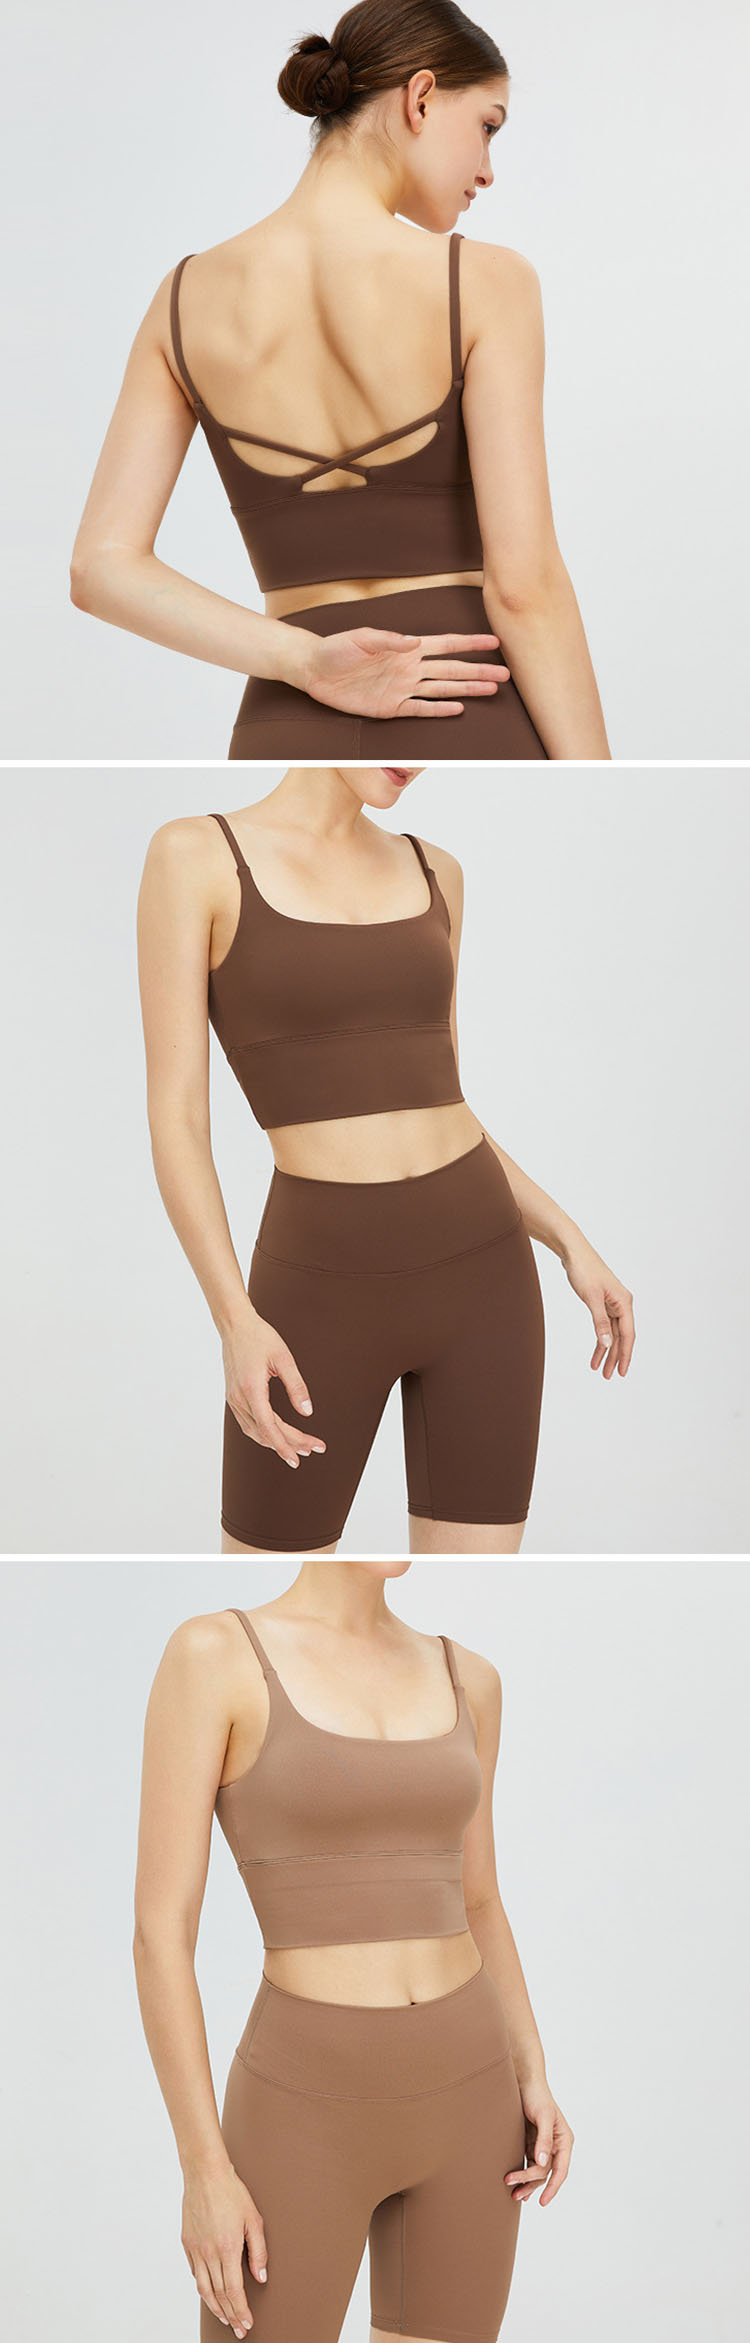 Slim-fit short design, slim waist and sexy figure